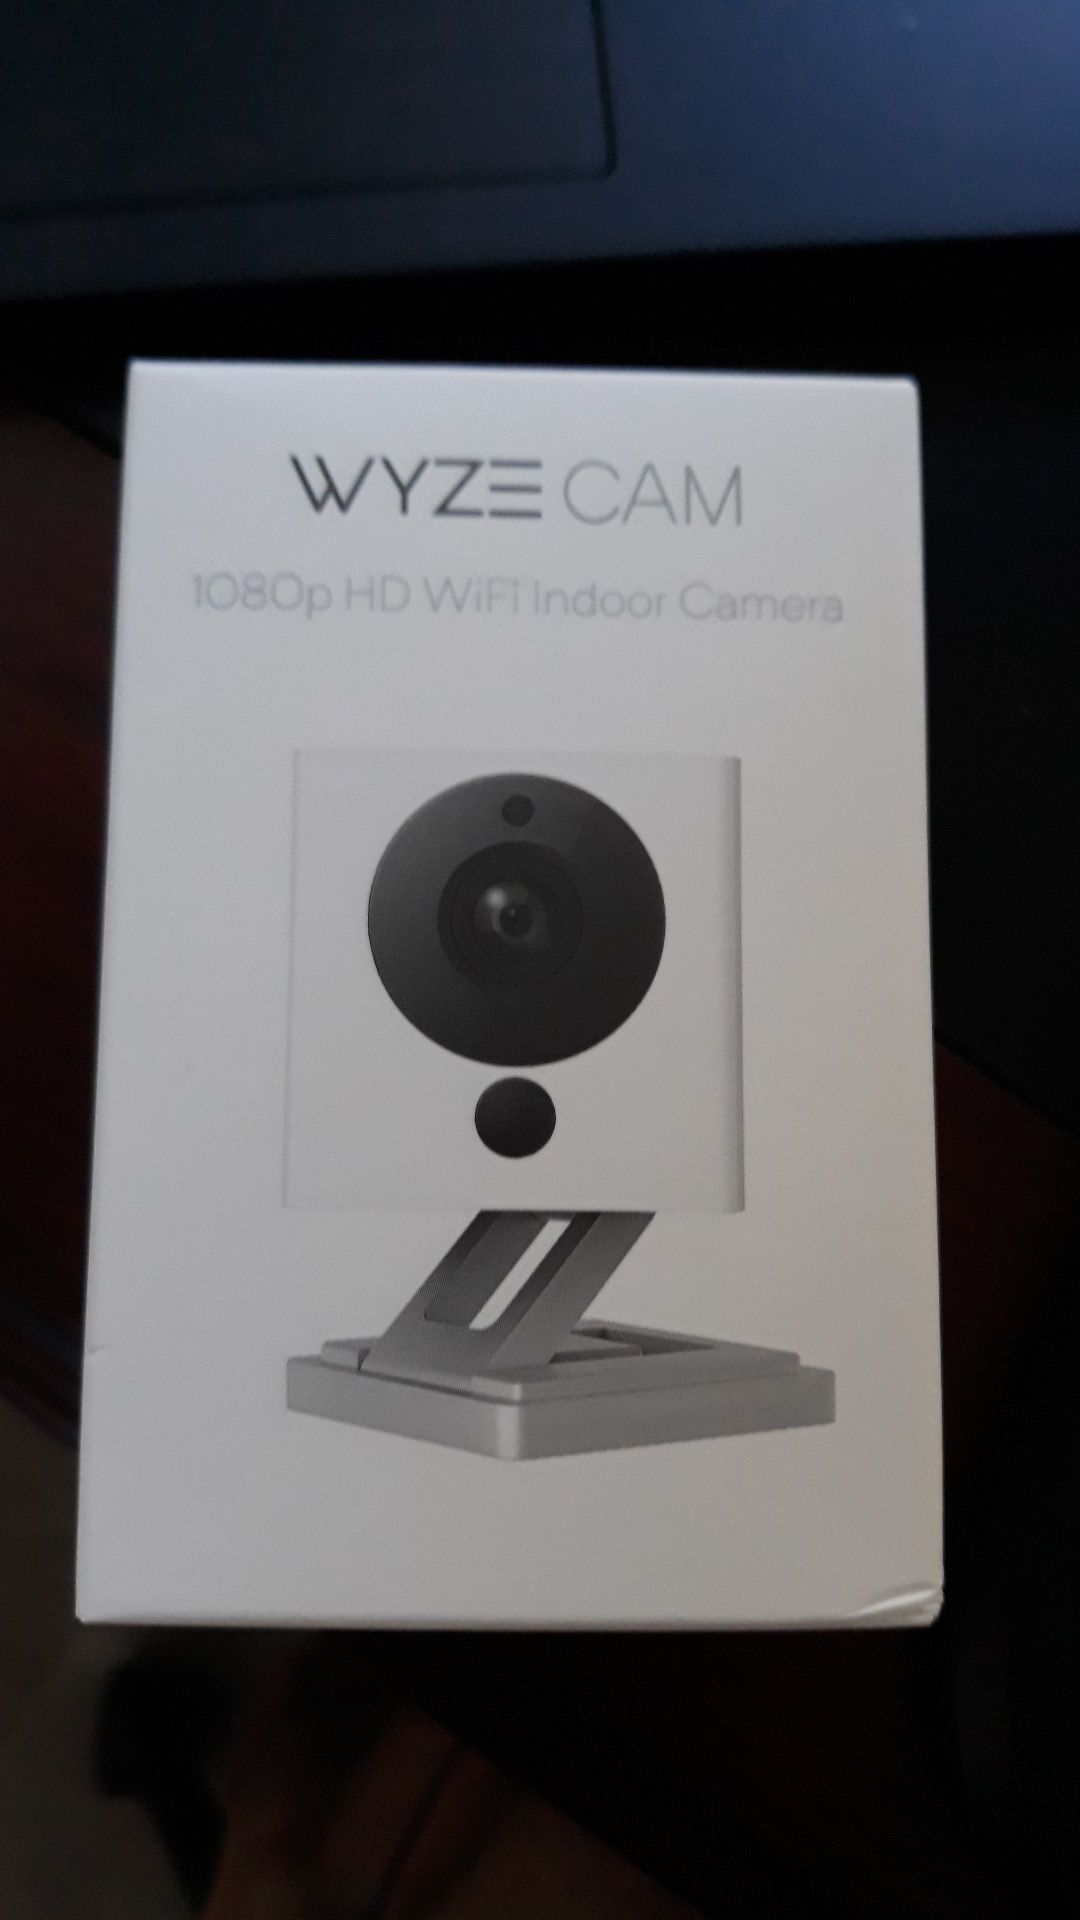 Wyze cam 1080p indoor wifi camera